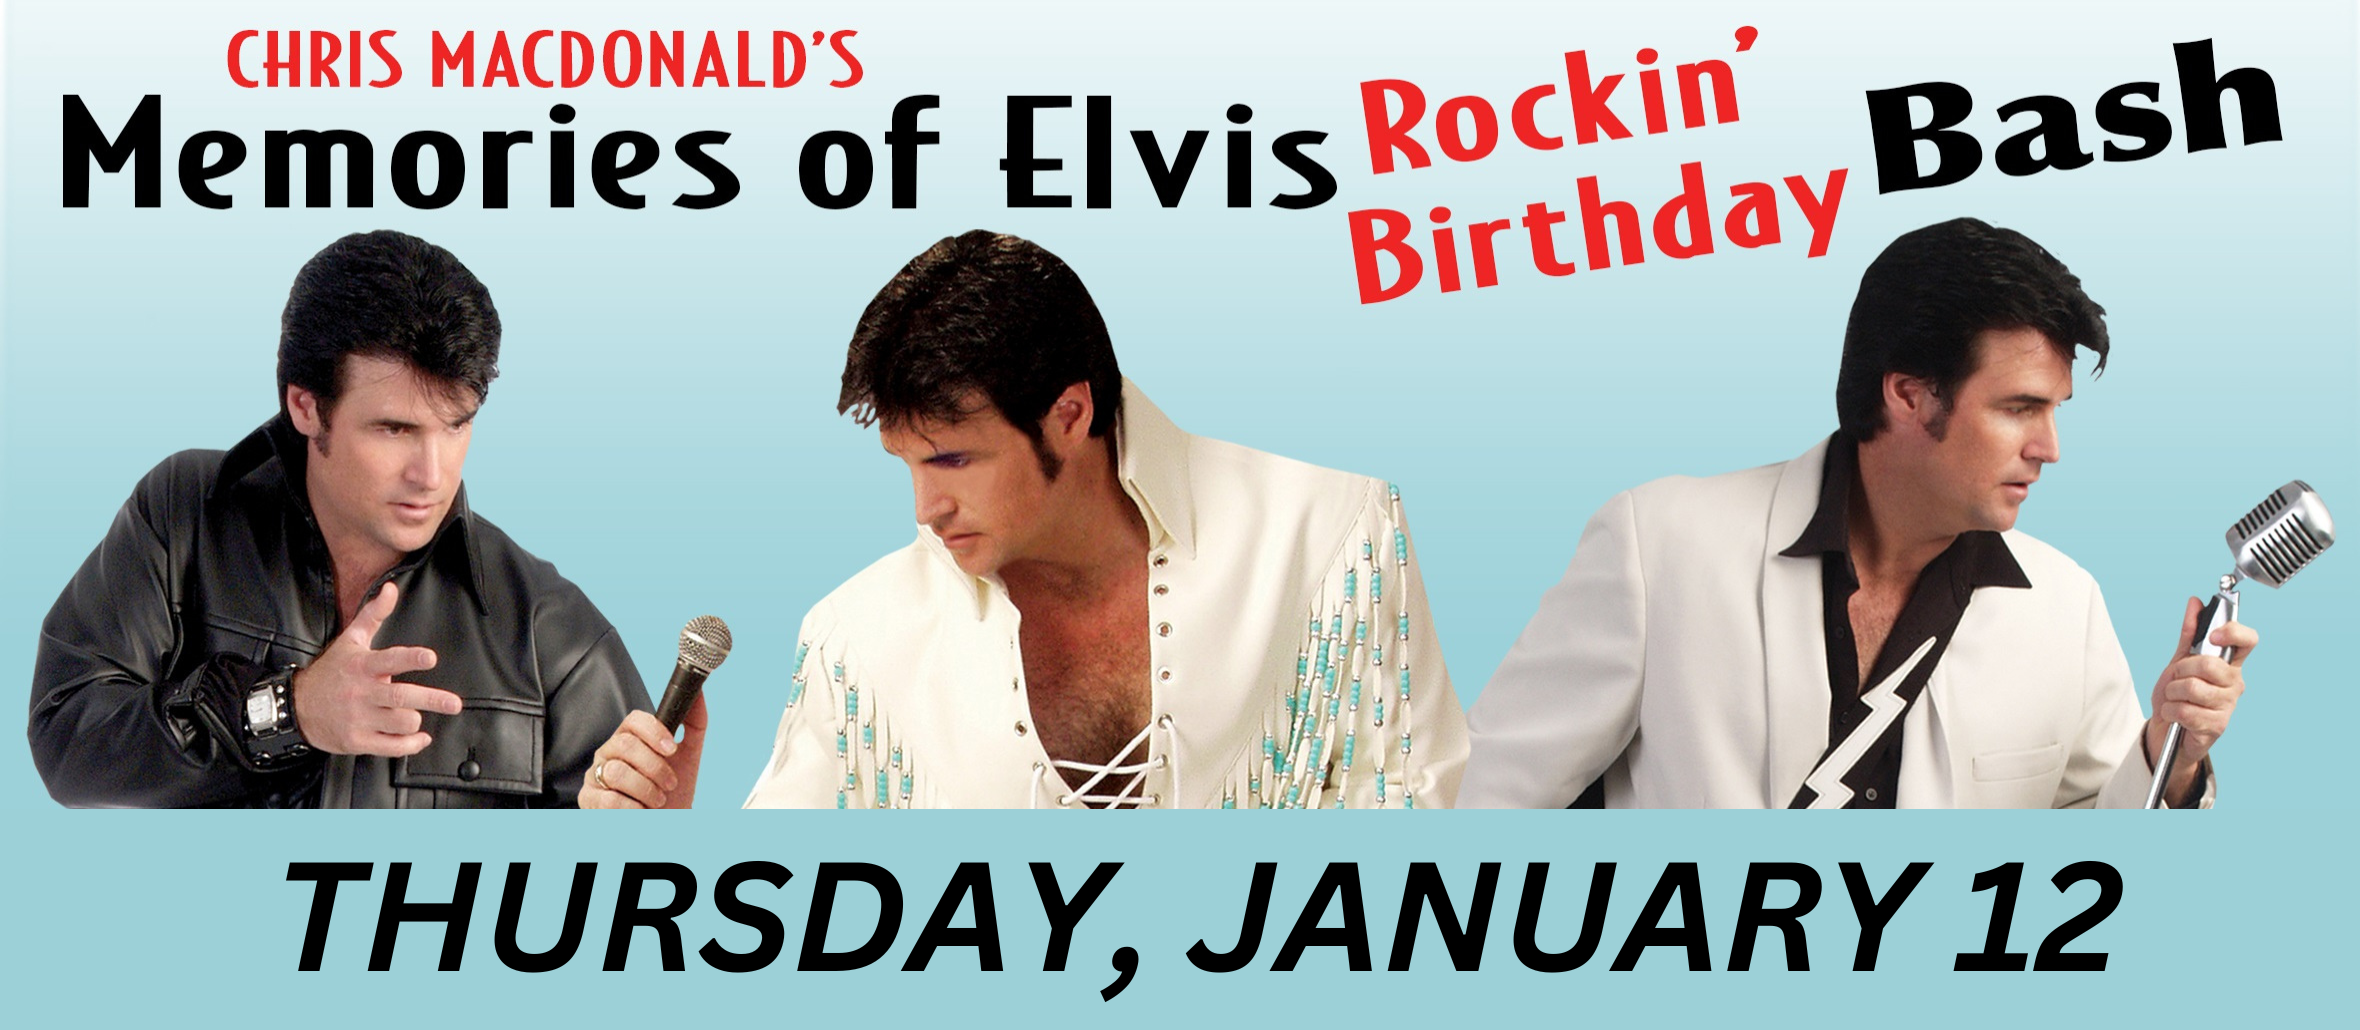 Chris MacDonald's Memories of Elvis Rockin' Birthday Bash